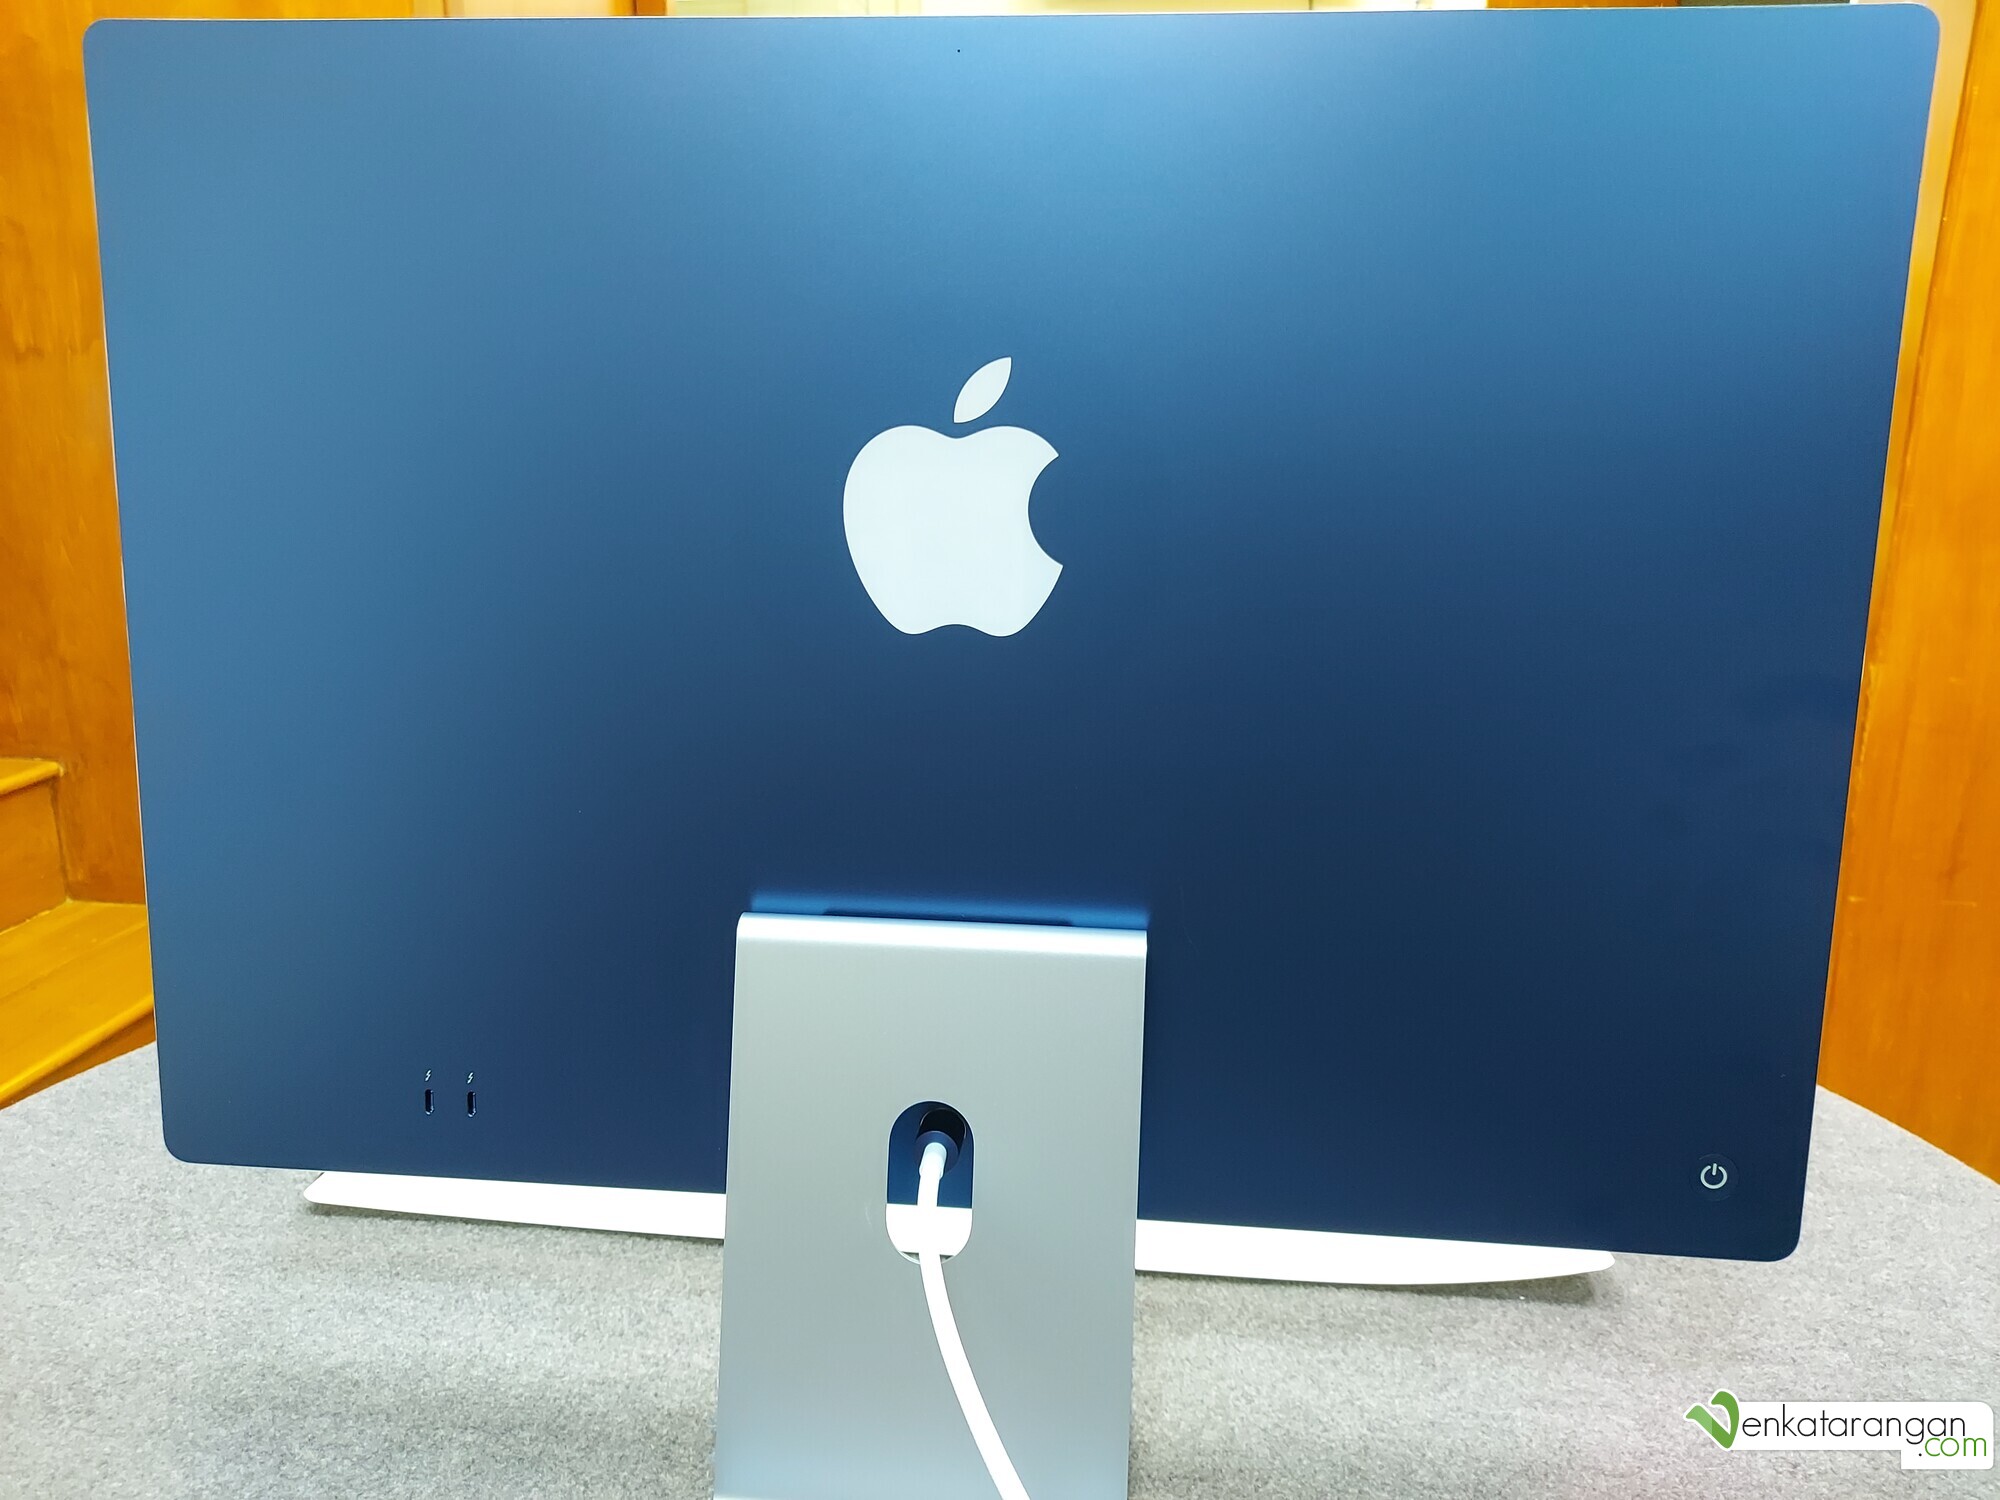 Two thunderbolt USB-C ports - 24-inch blue iMac with 4.5K Retina display